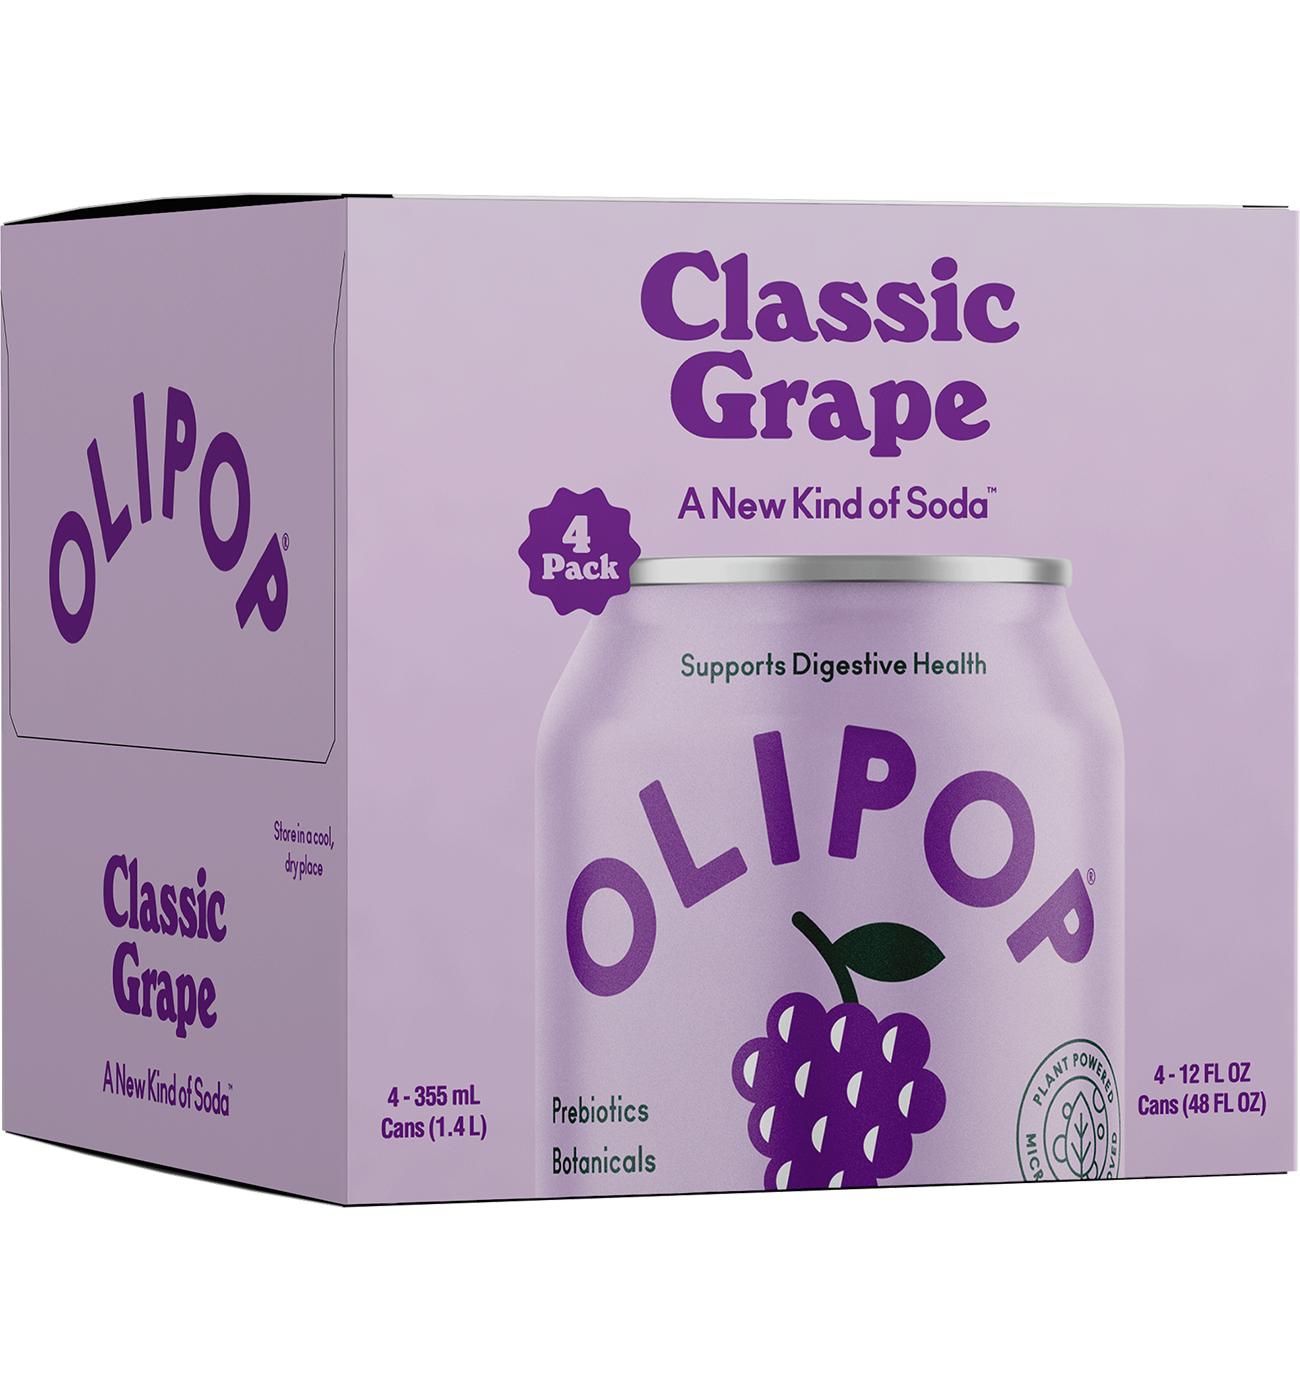 Olipop Prebiotic Soda Classic Grape 4 pk Cans; image 1 of 2